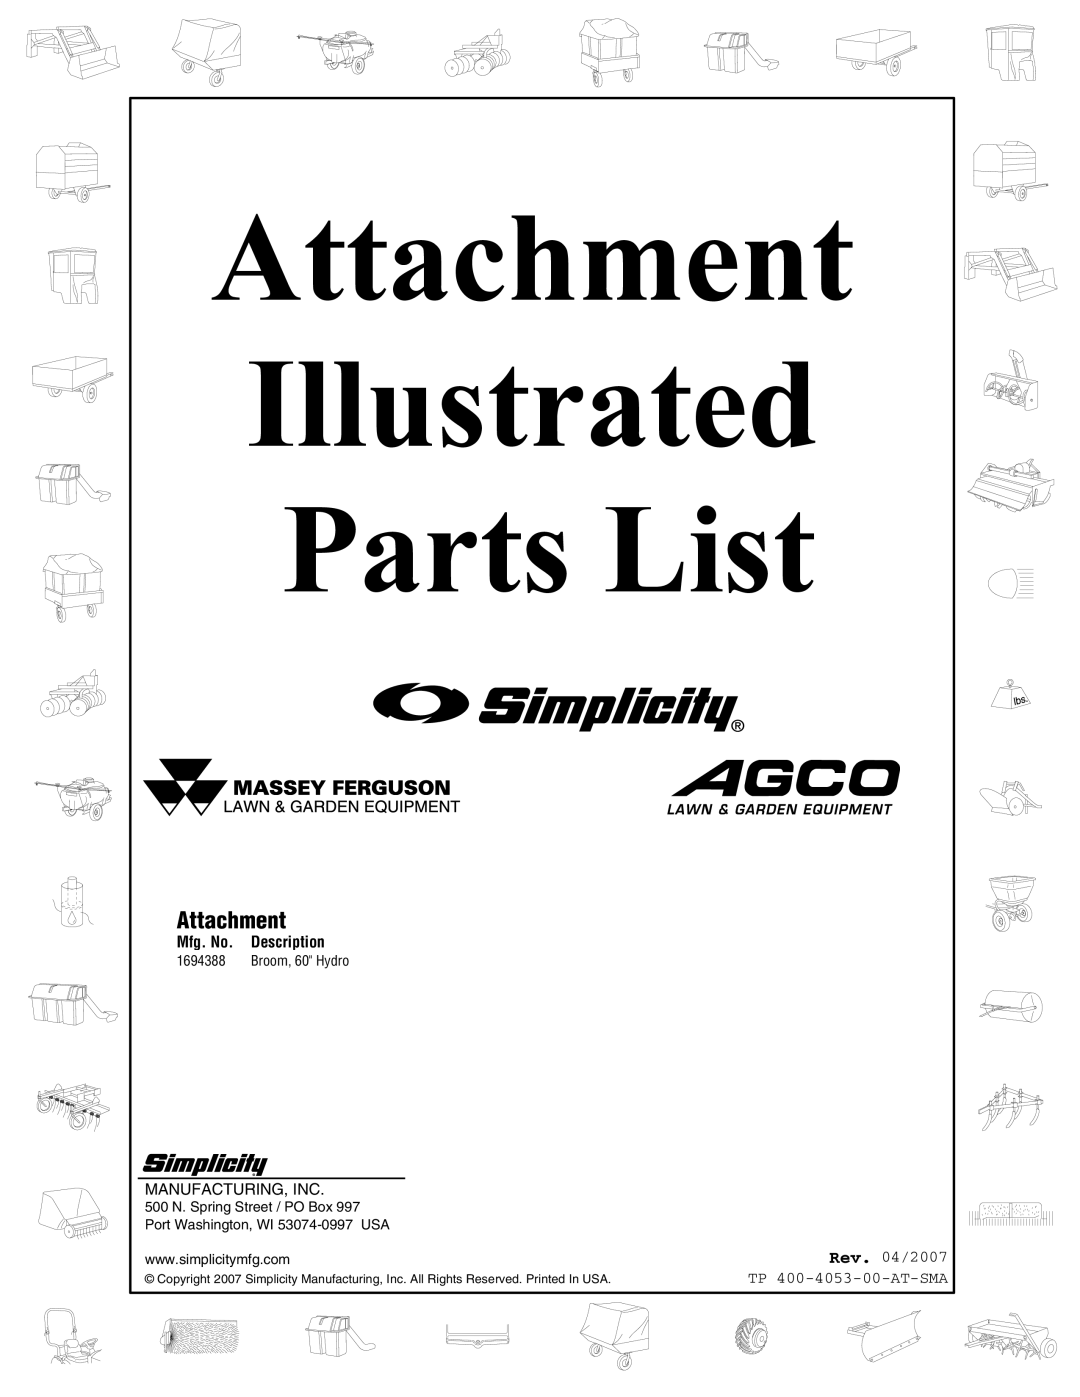 Snapper manual Attachment, Mfg. No, Description, Rev. 04/2007, TP 400-4053-00-AT-SMA, Illustrated, Parts List 